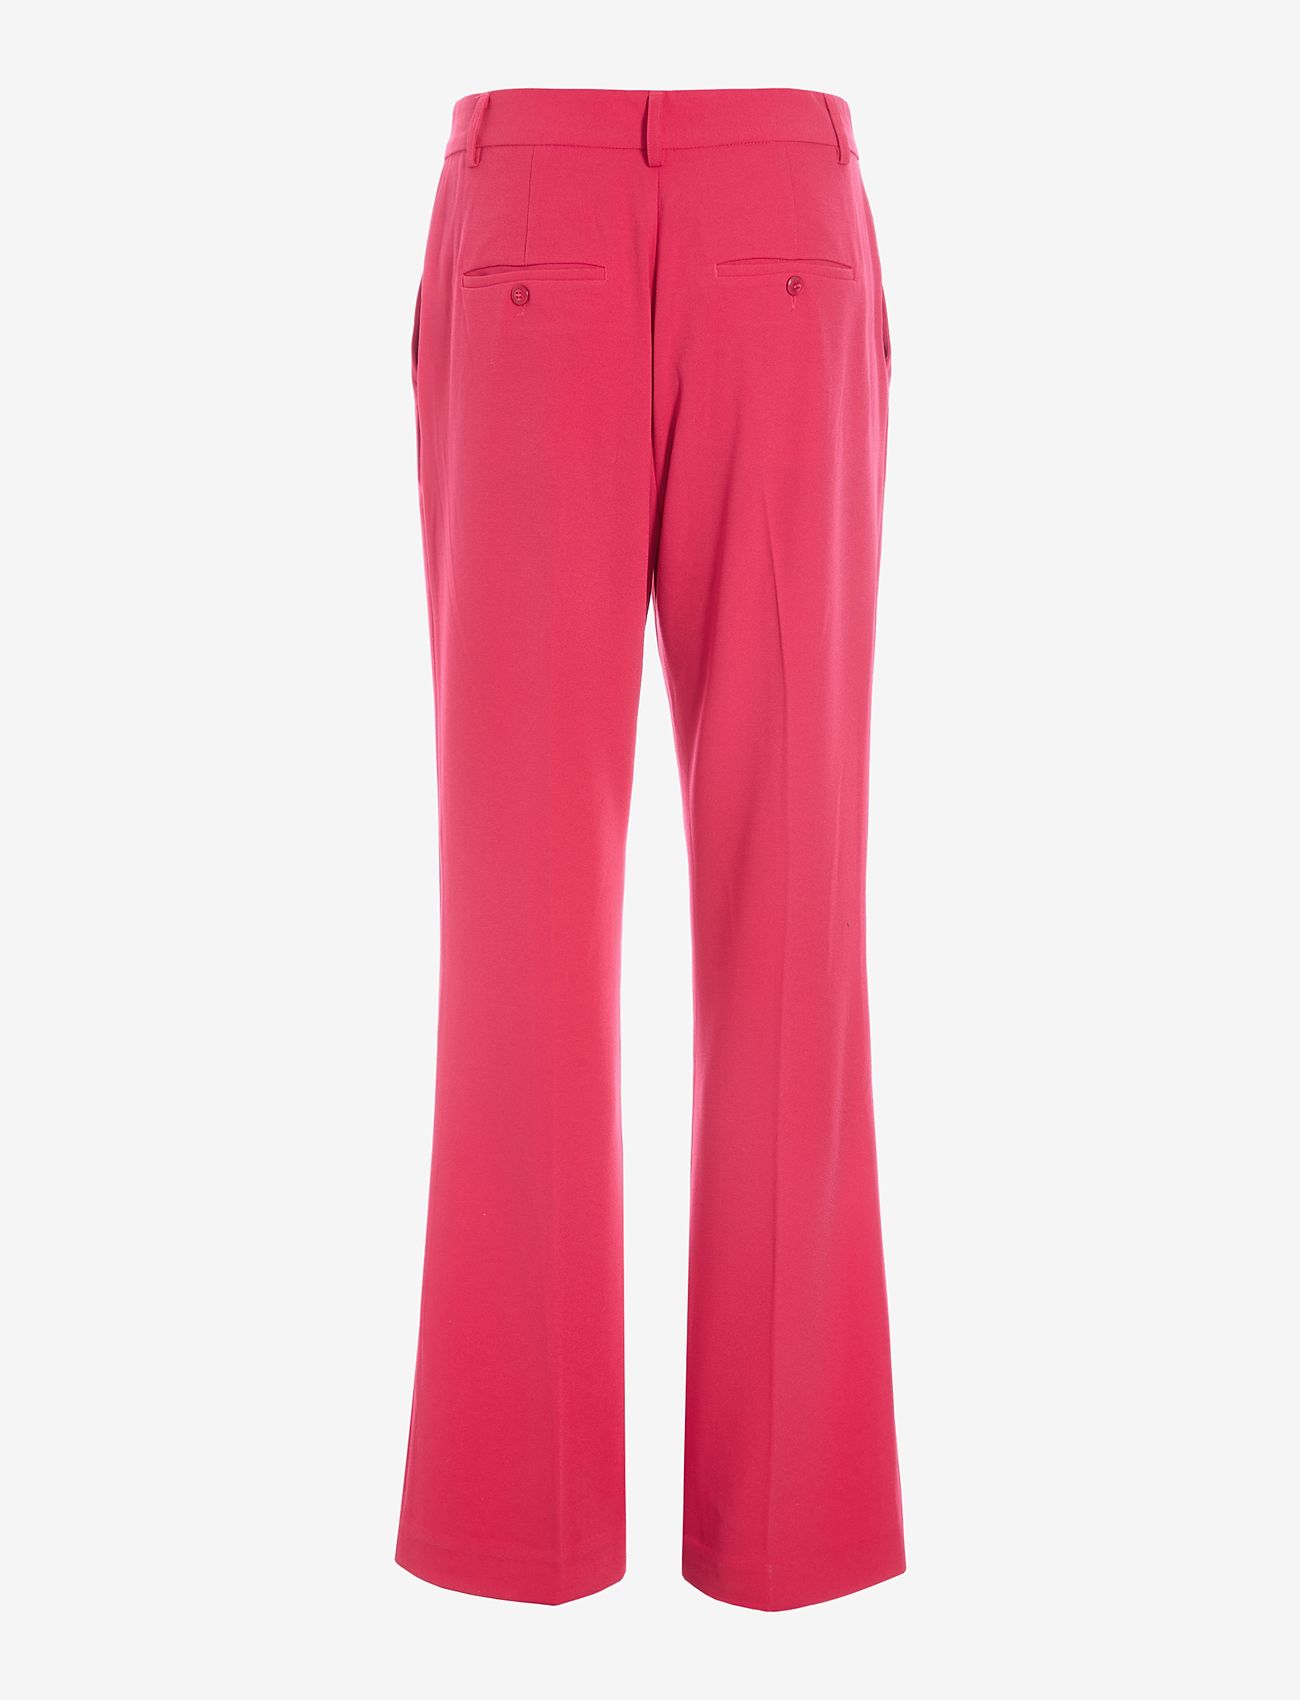 Dea Kudibal - RIHANNA - trousers - hot pink - 1